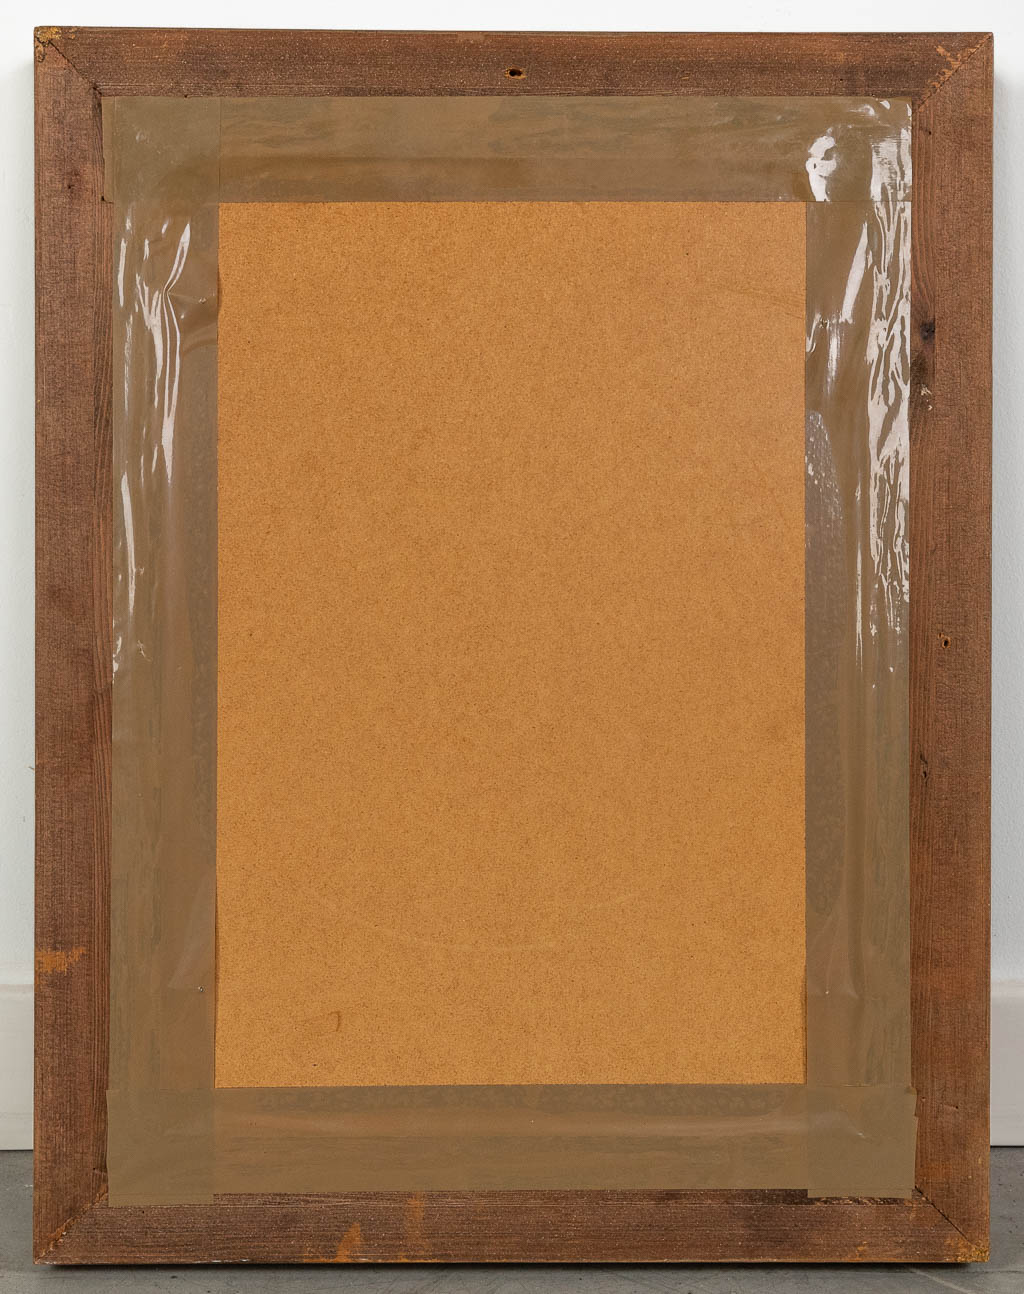 Paul PERMEKE (1918-1990) 'Three Drawings' charcoal on paper. (W:34 x H:24 cm)